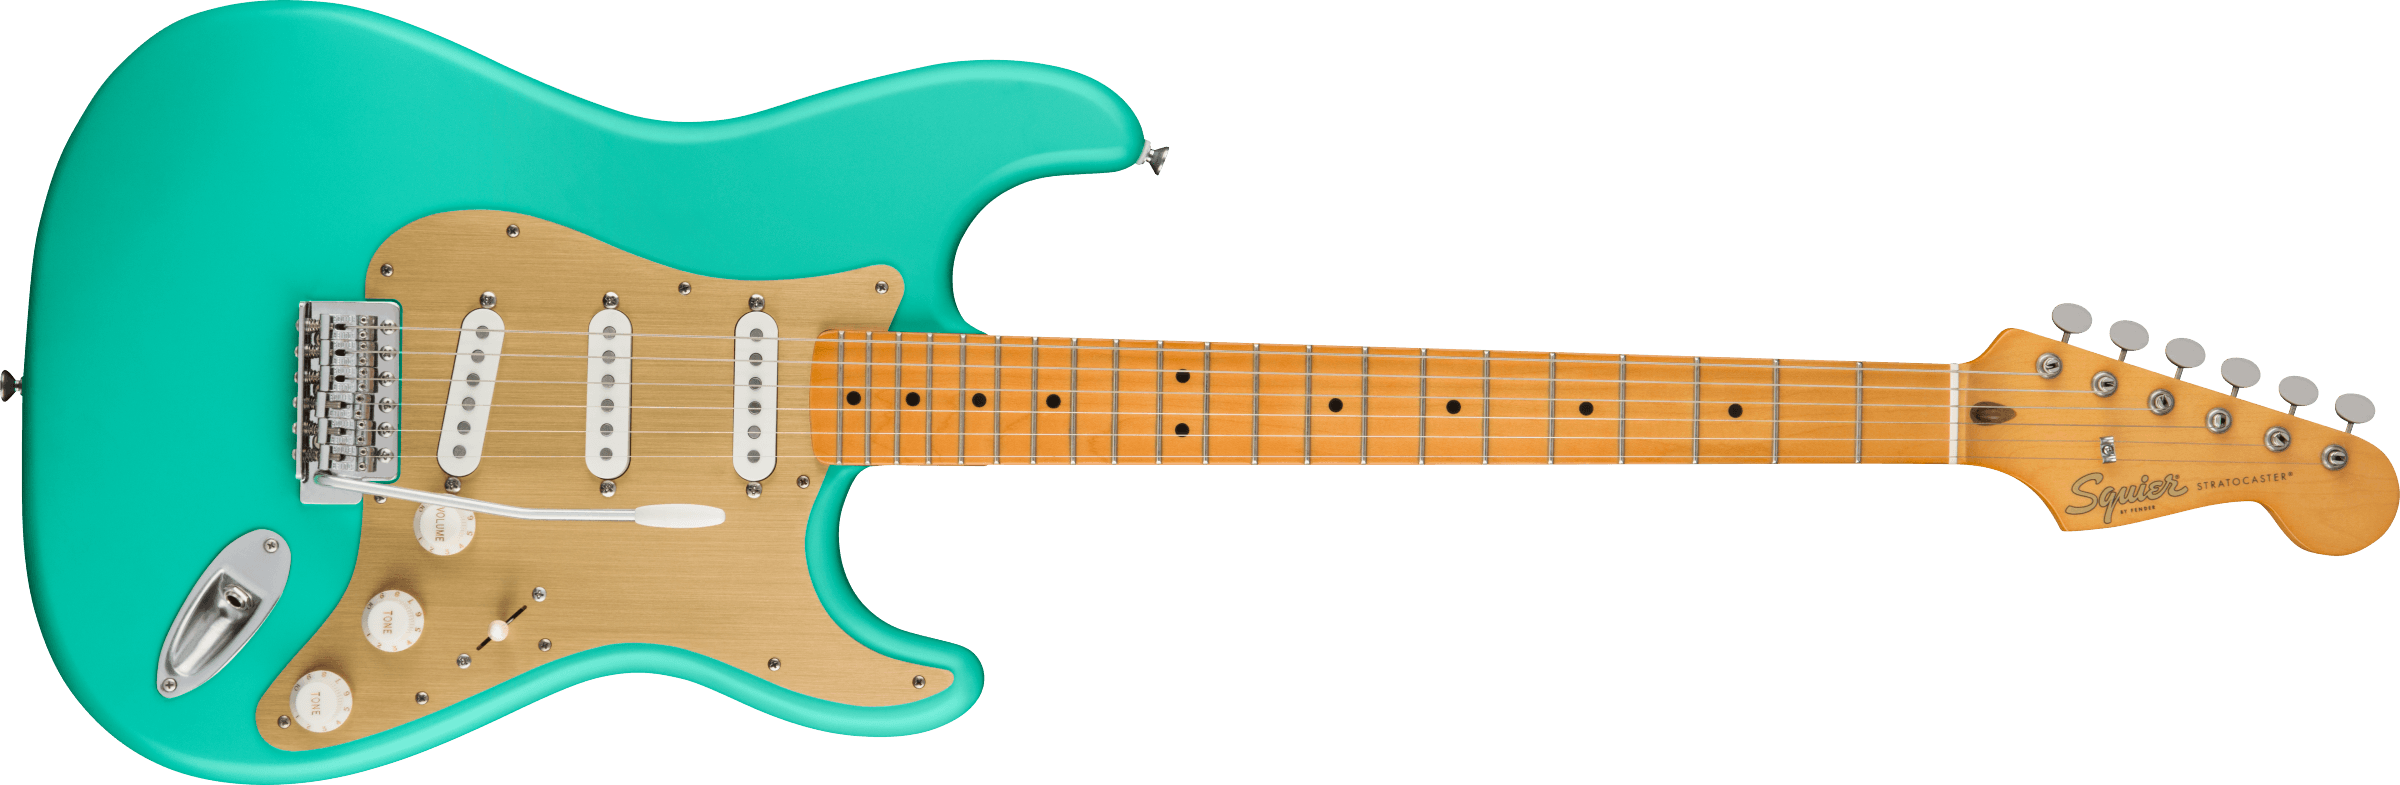 40th Anniversary Stratocaster®, Vintage Edition, Maple Fingerboard, Gold Anodized Pickguard, Satin Sea Foam Green